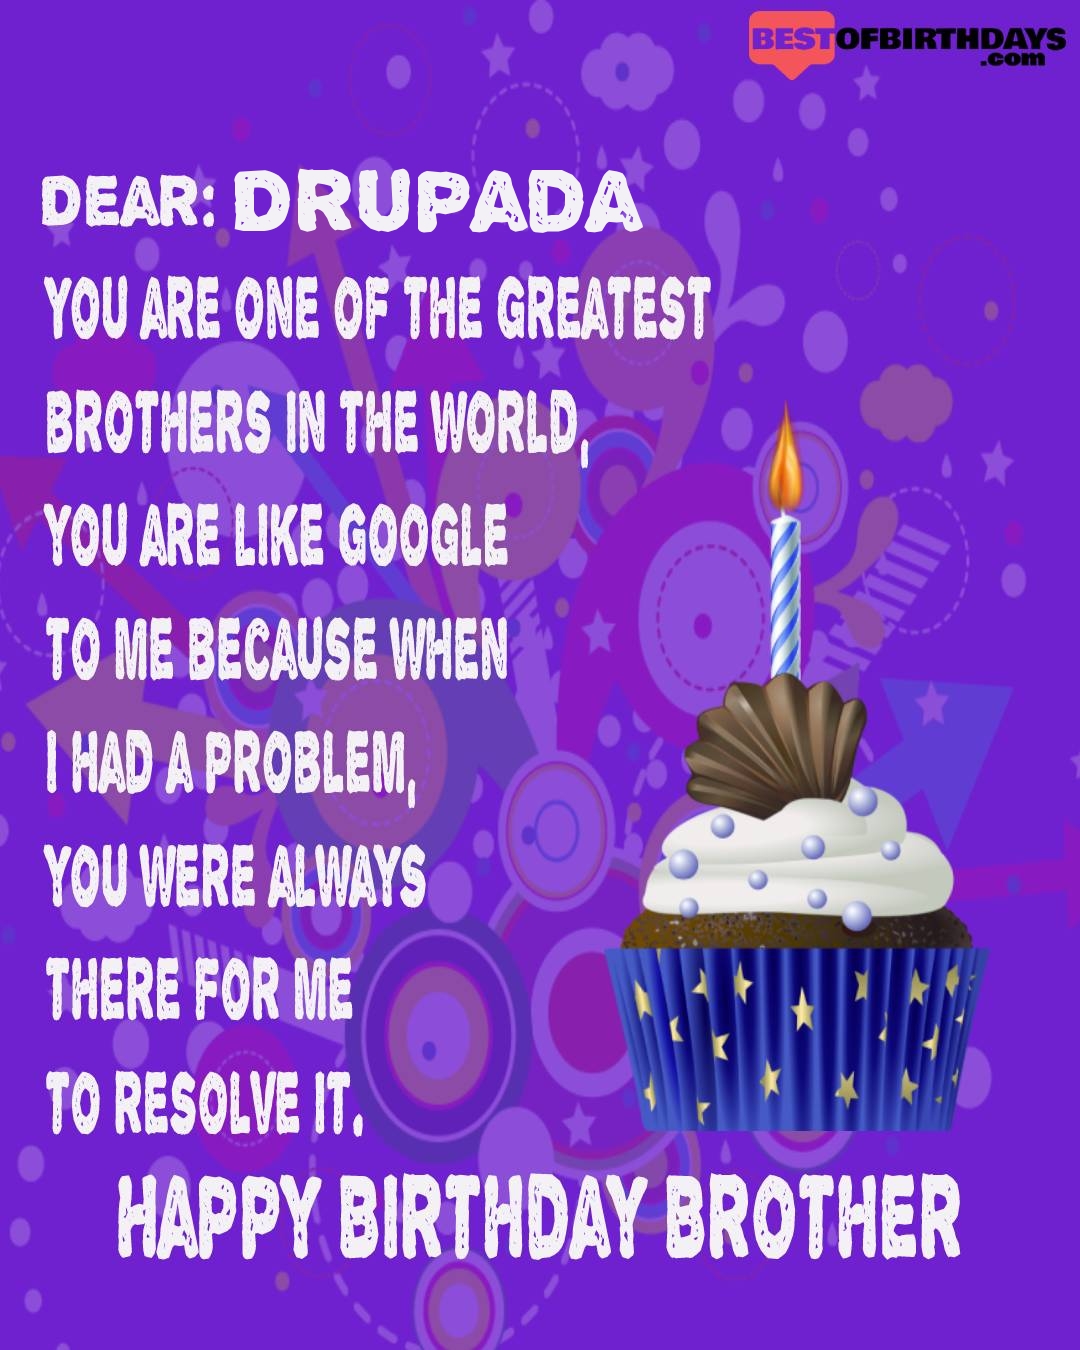 Happy birthday drupada bhai brother bro